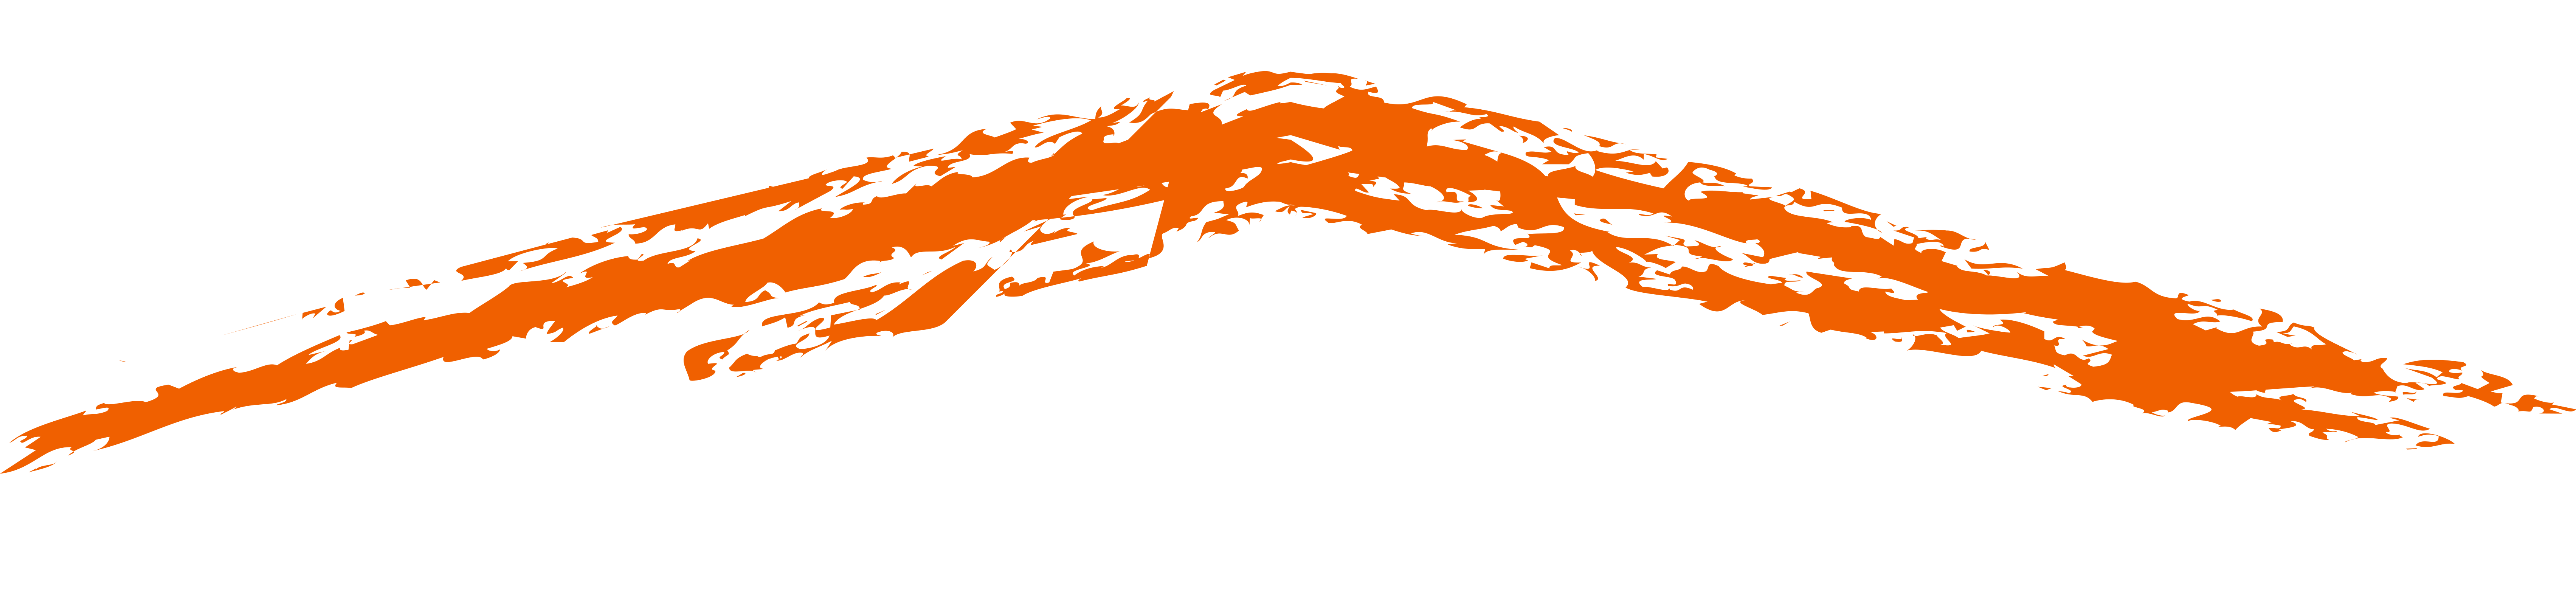 PH-Roof-Orange